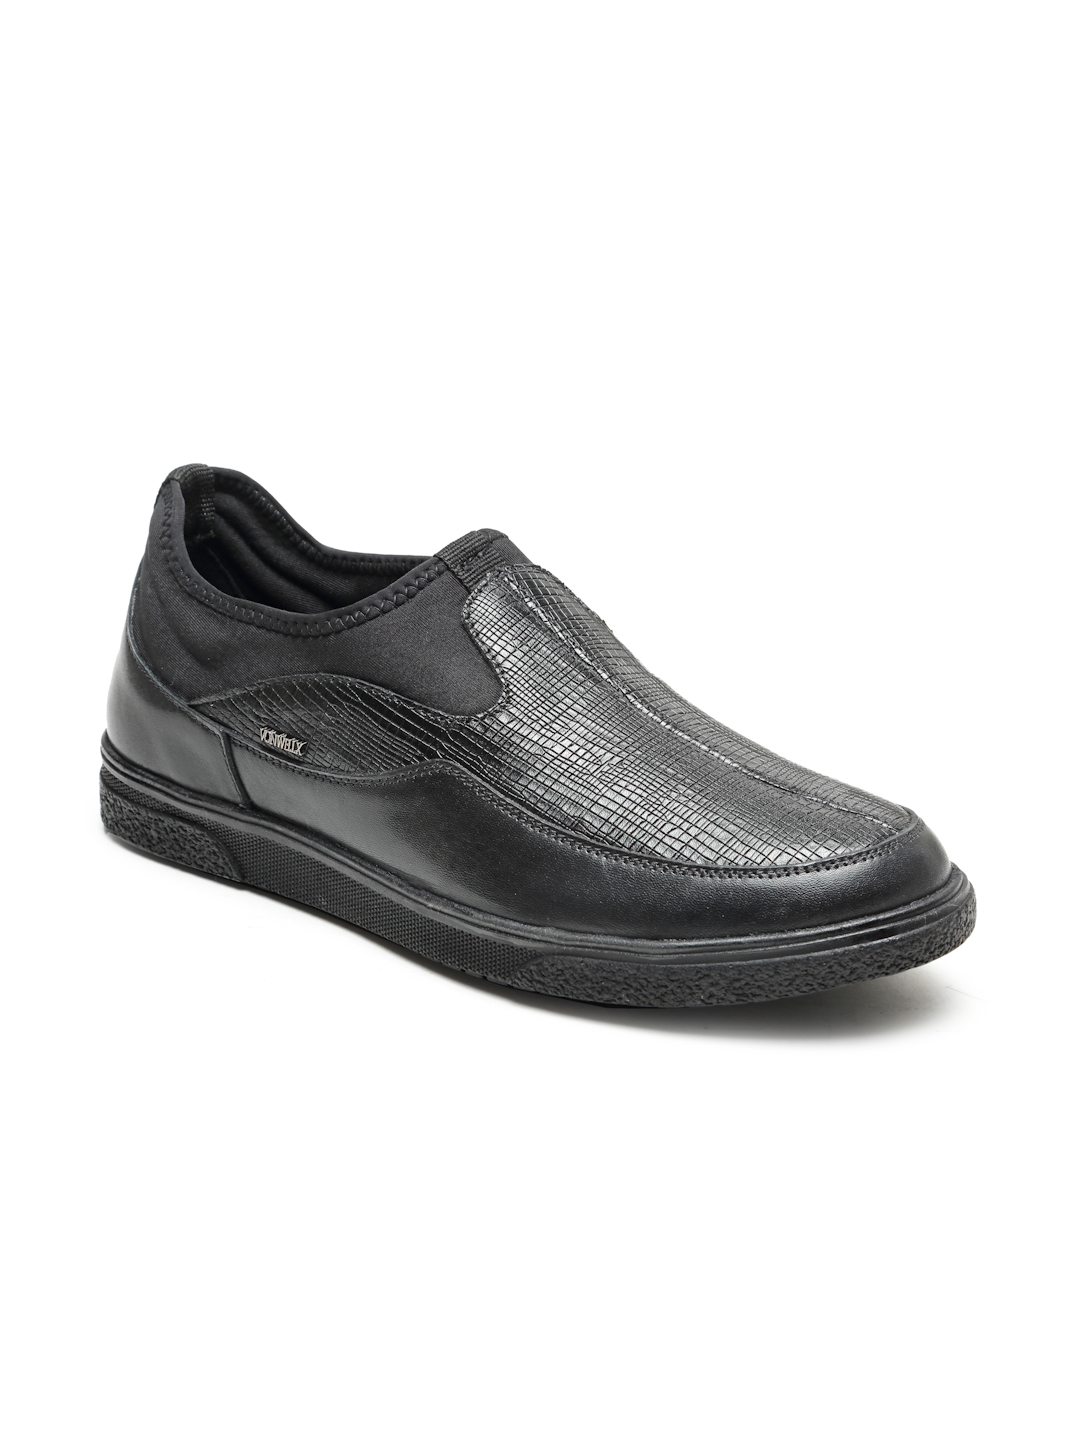 Buy Von Wellx Germany Comfort Men's Black Casual Loafers Everett Online in Sri Lanka